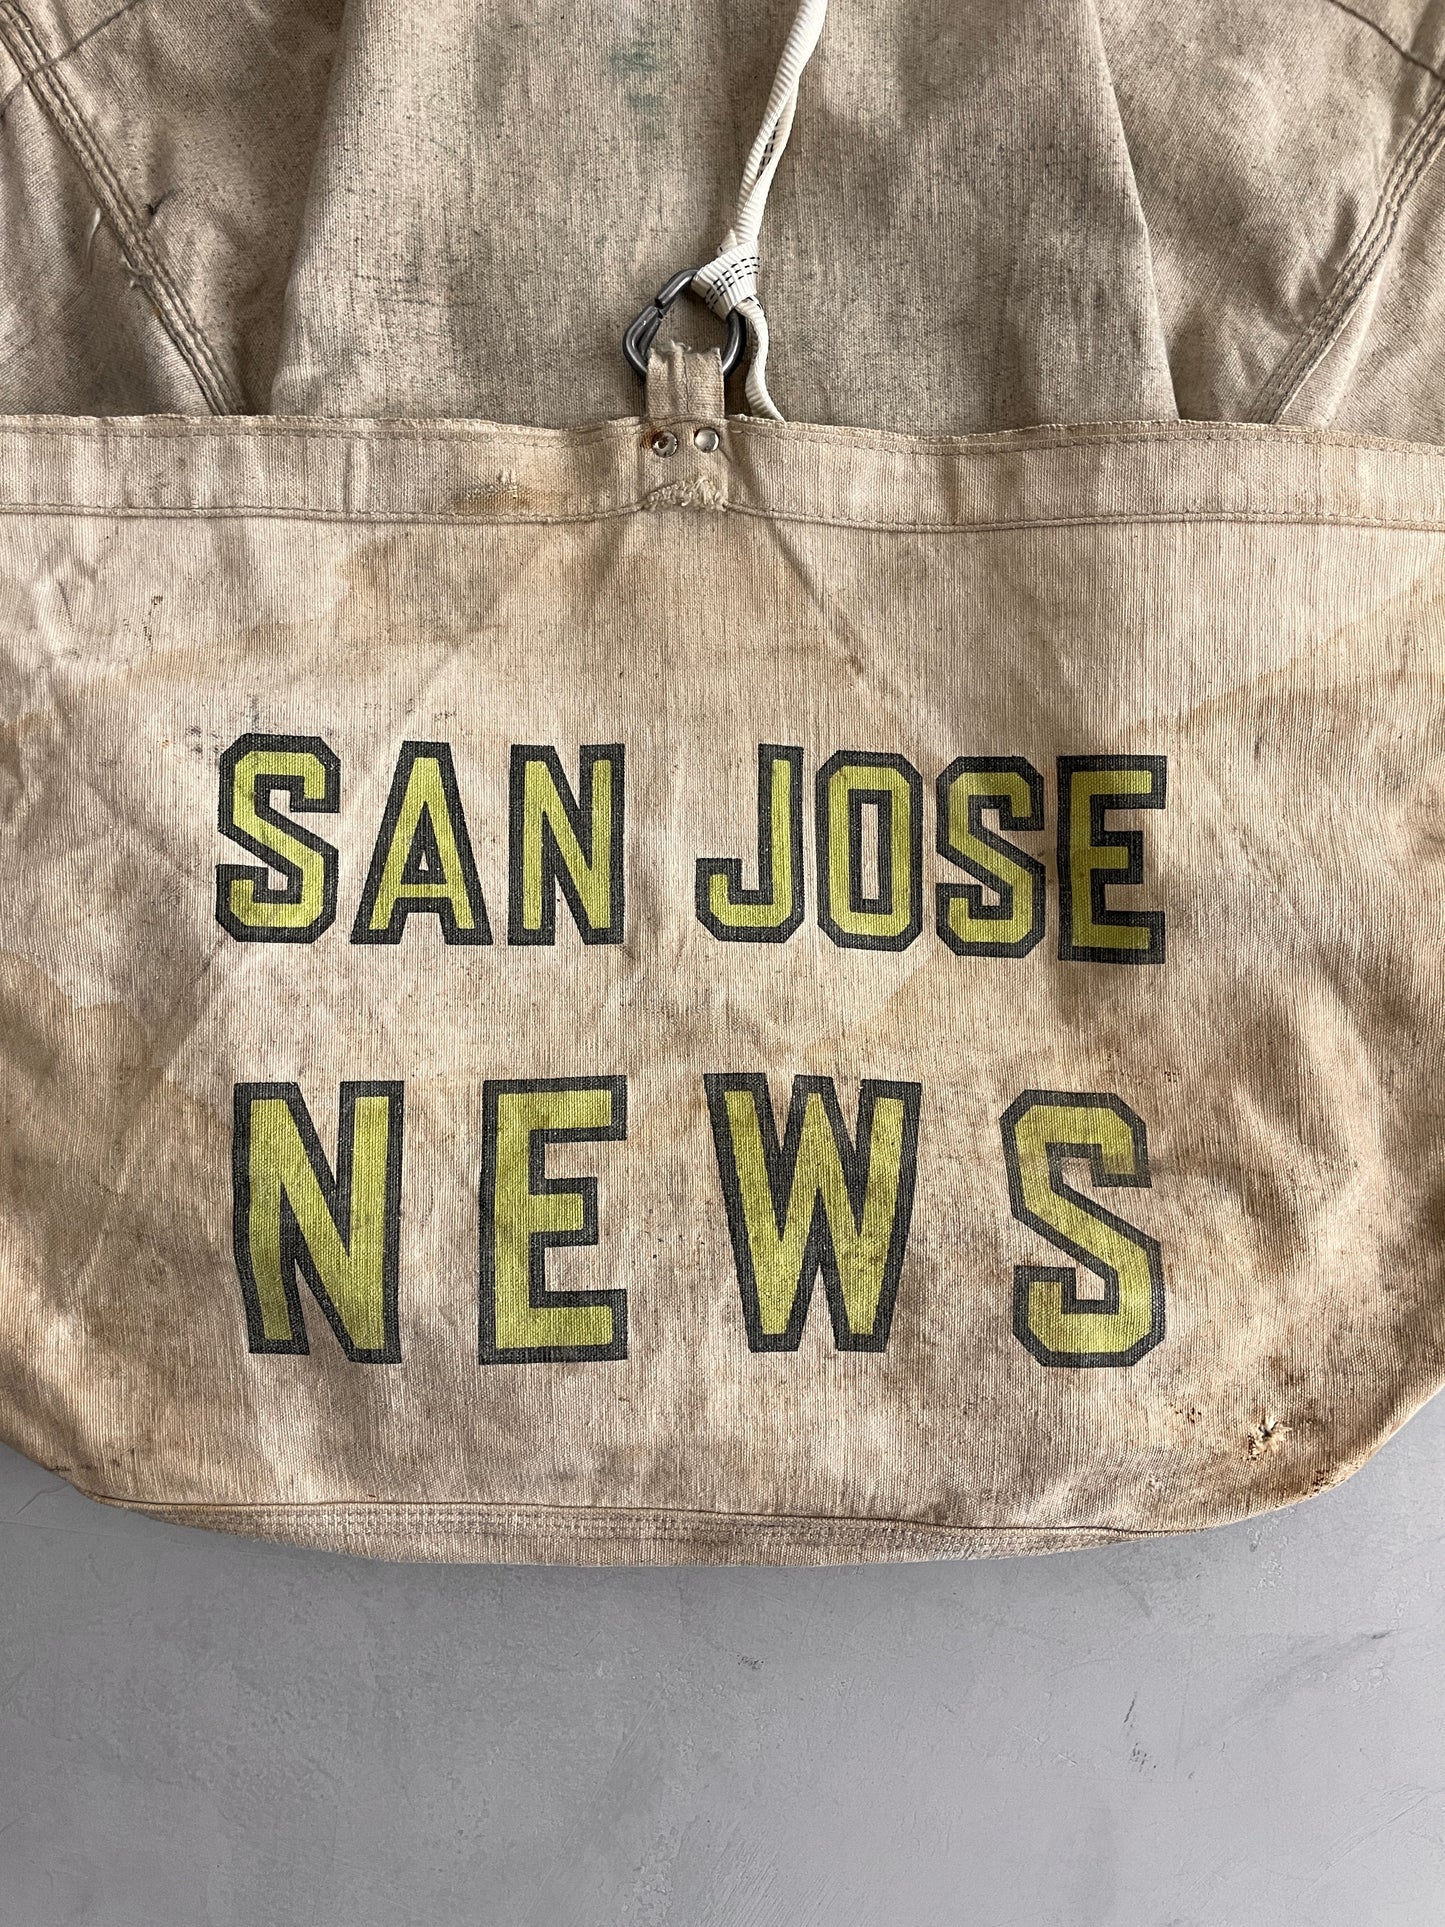 San Jose Newspaper Bag